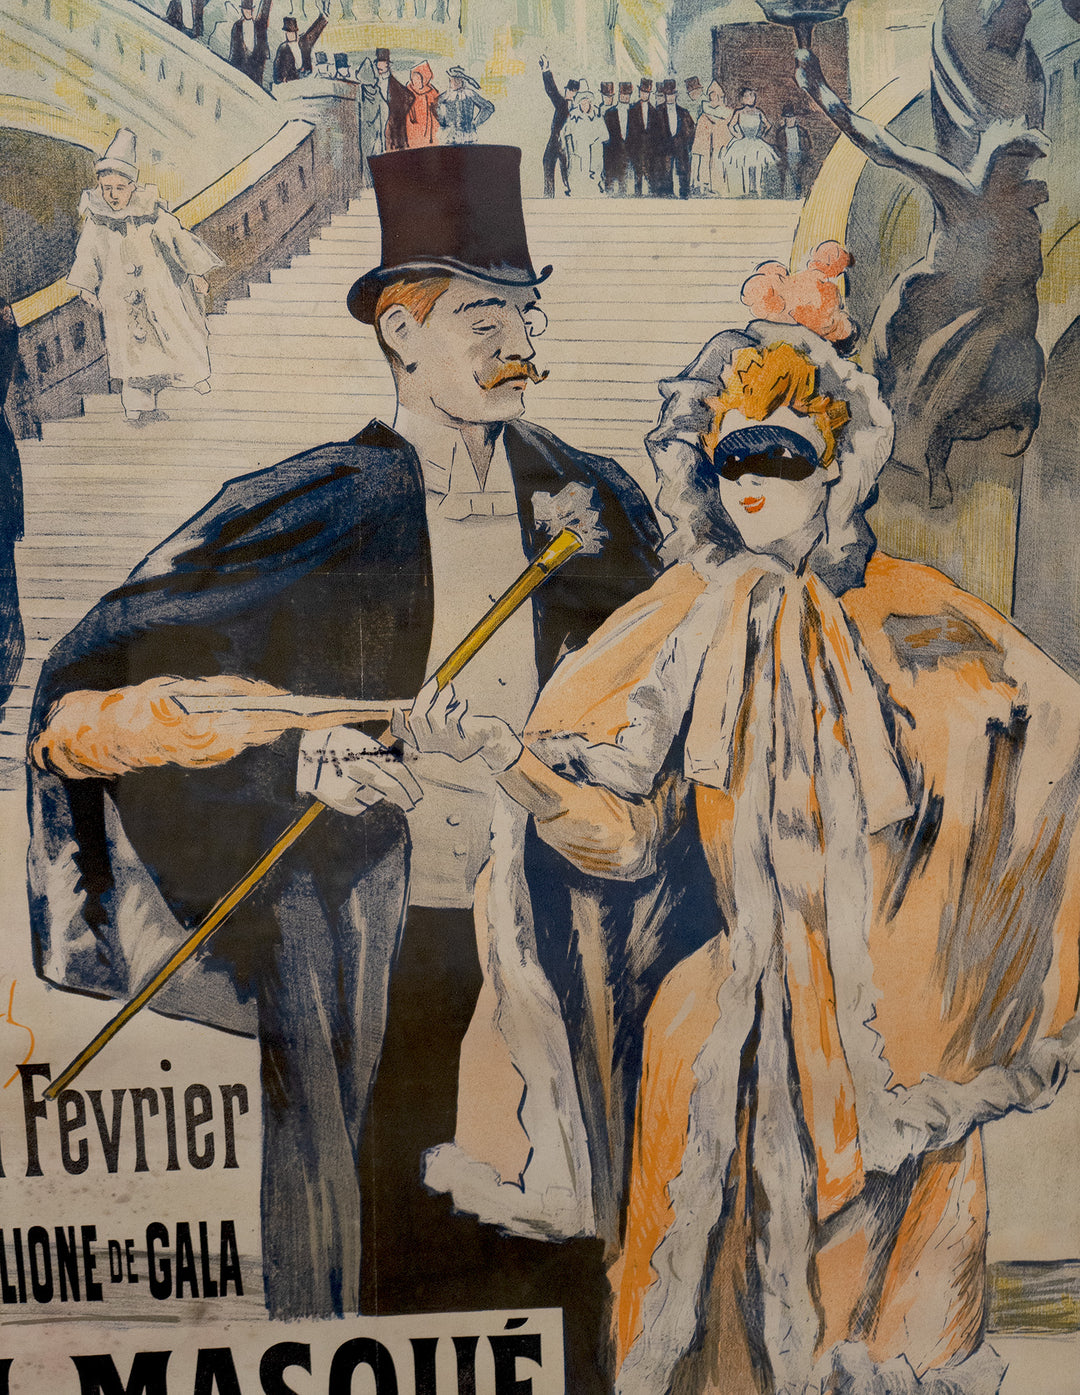 Carnaval, (1893) by Ferdinand Lunel